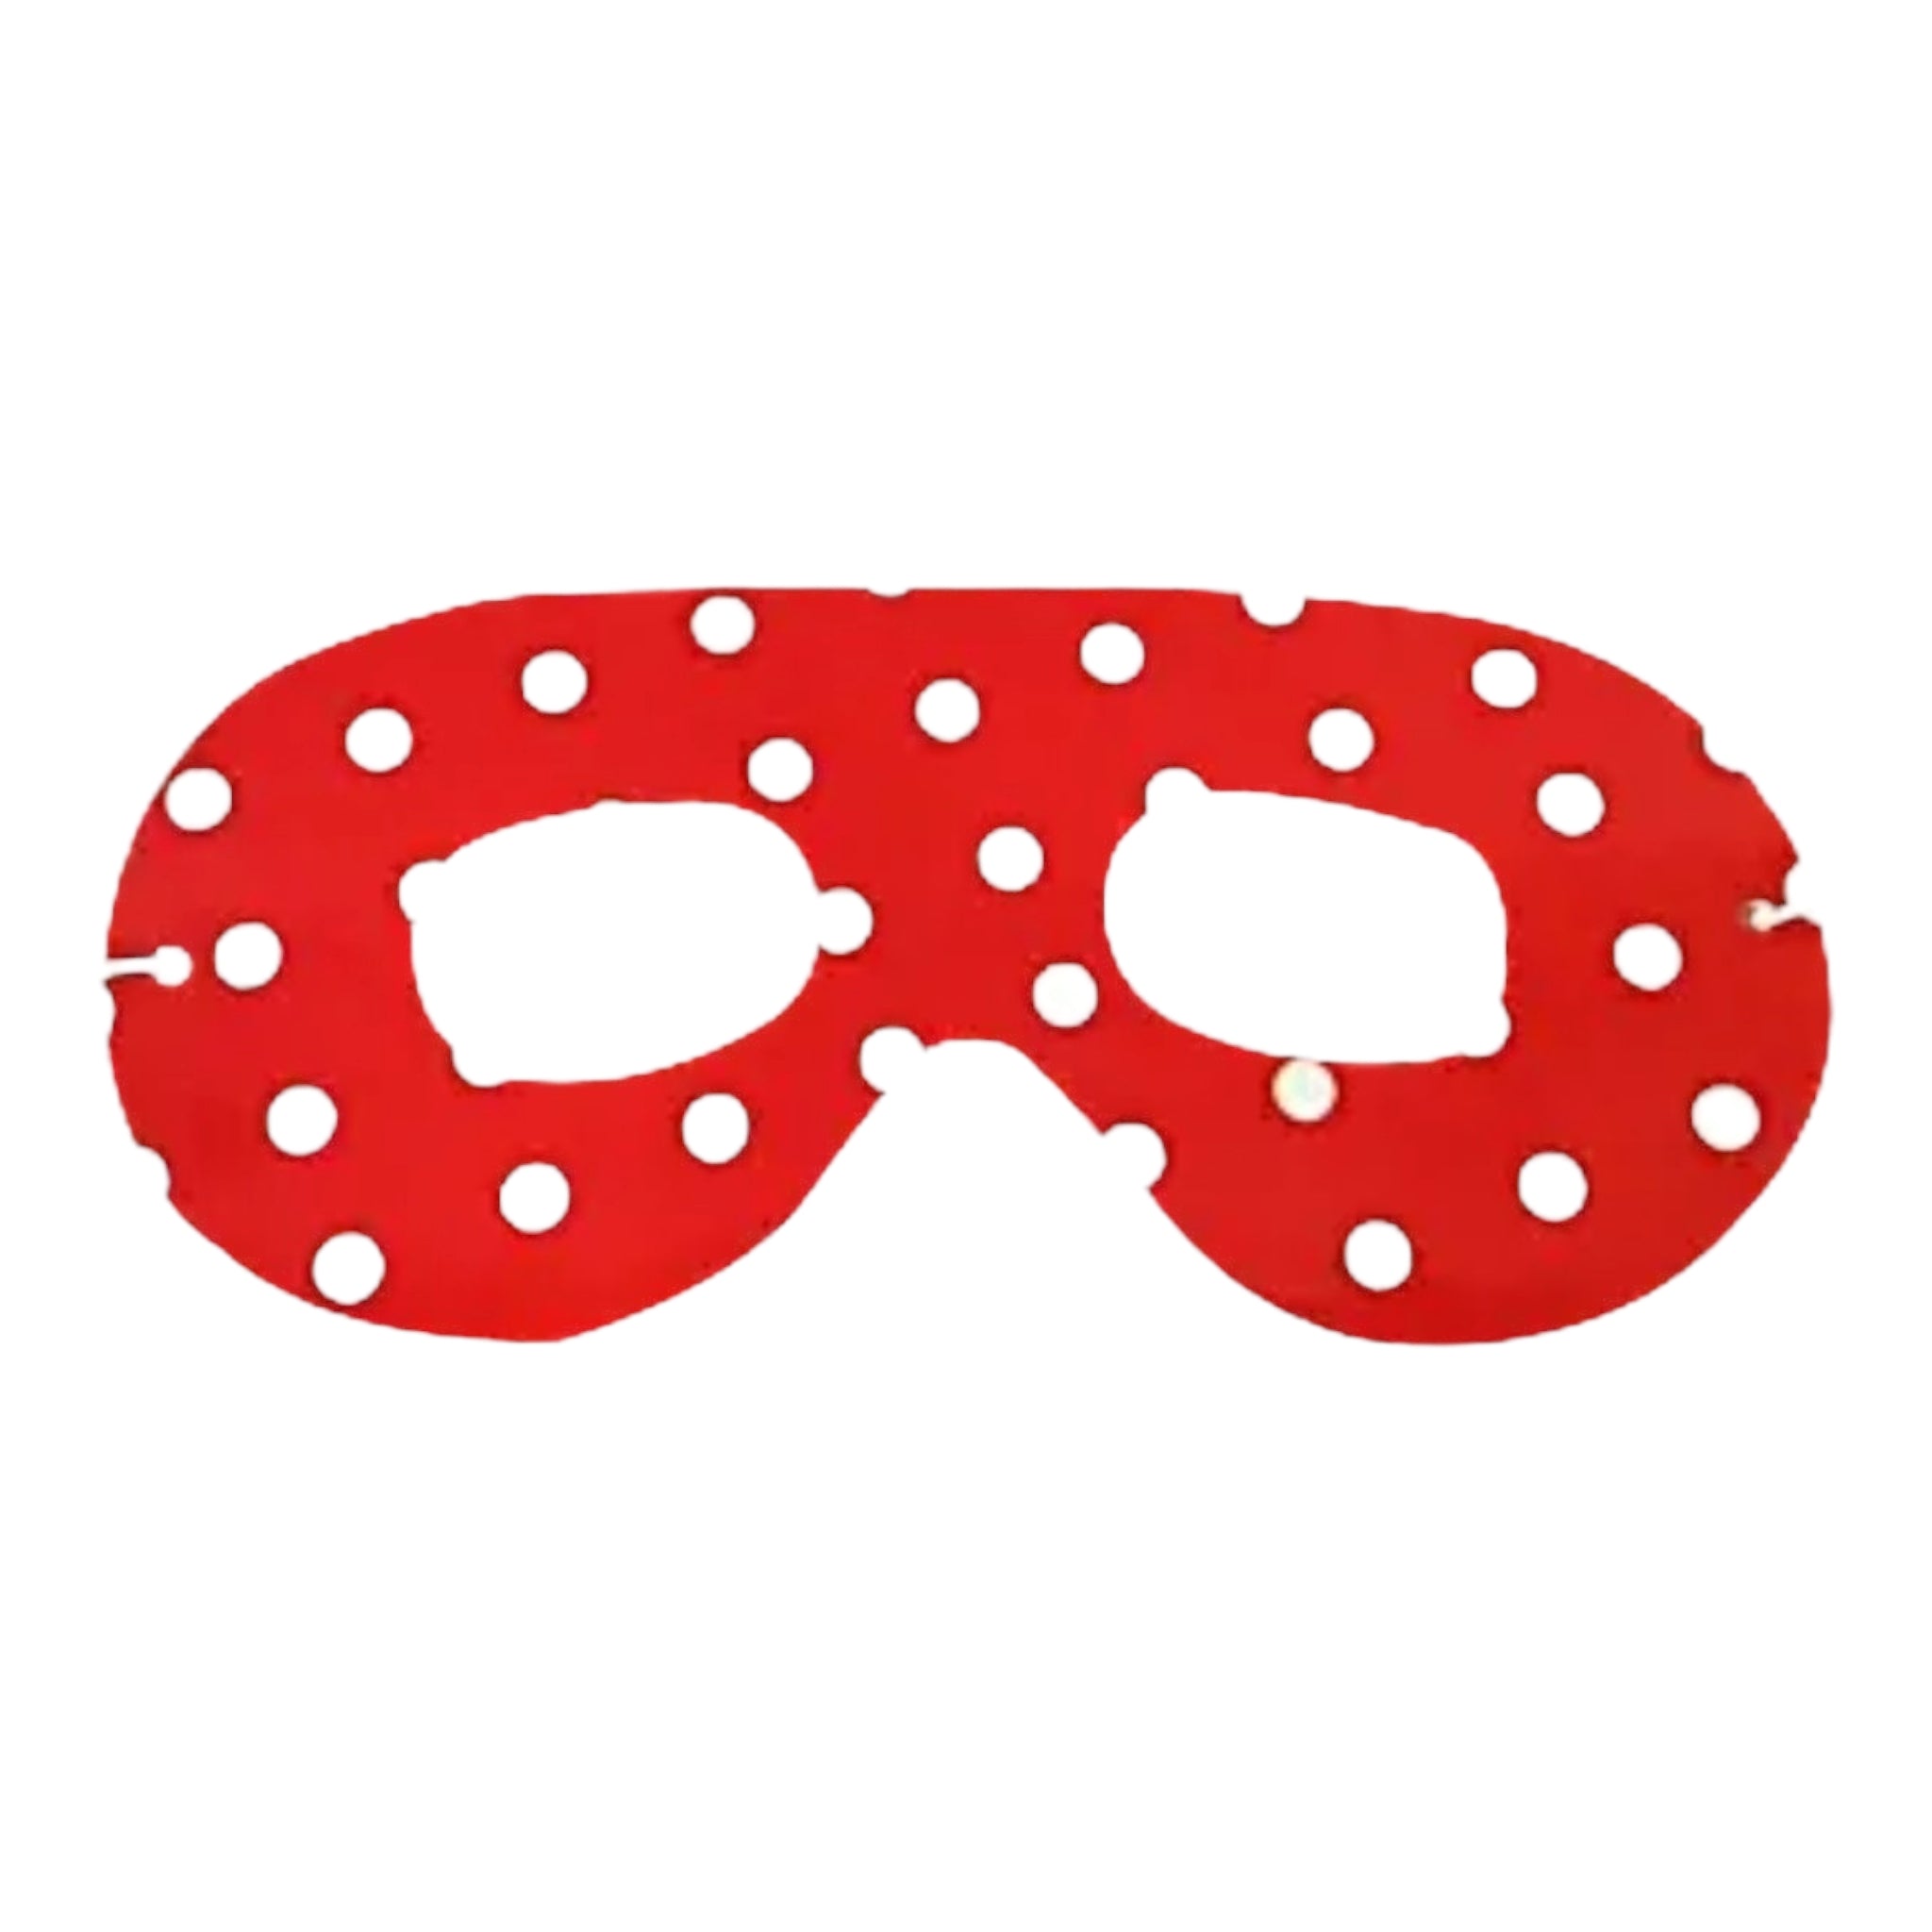 Paper Eye Mask Polka Dot 10pack